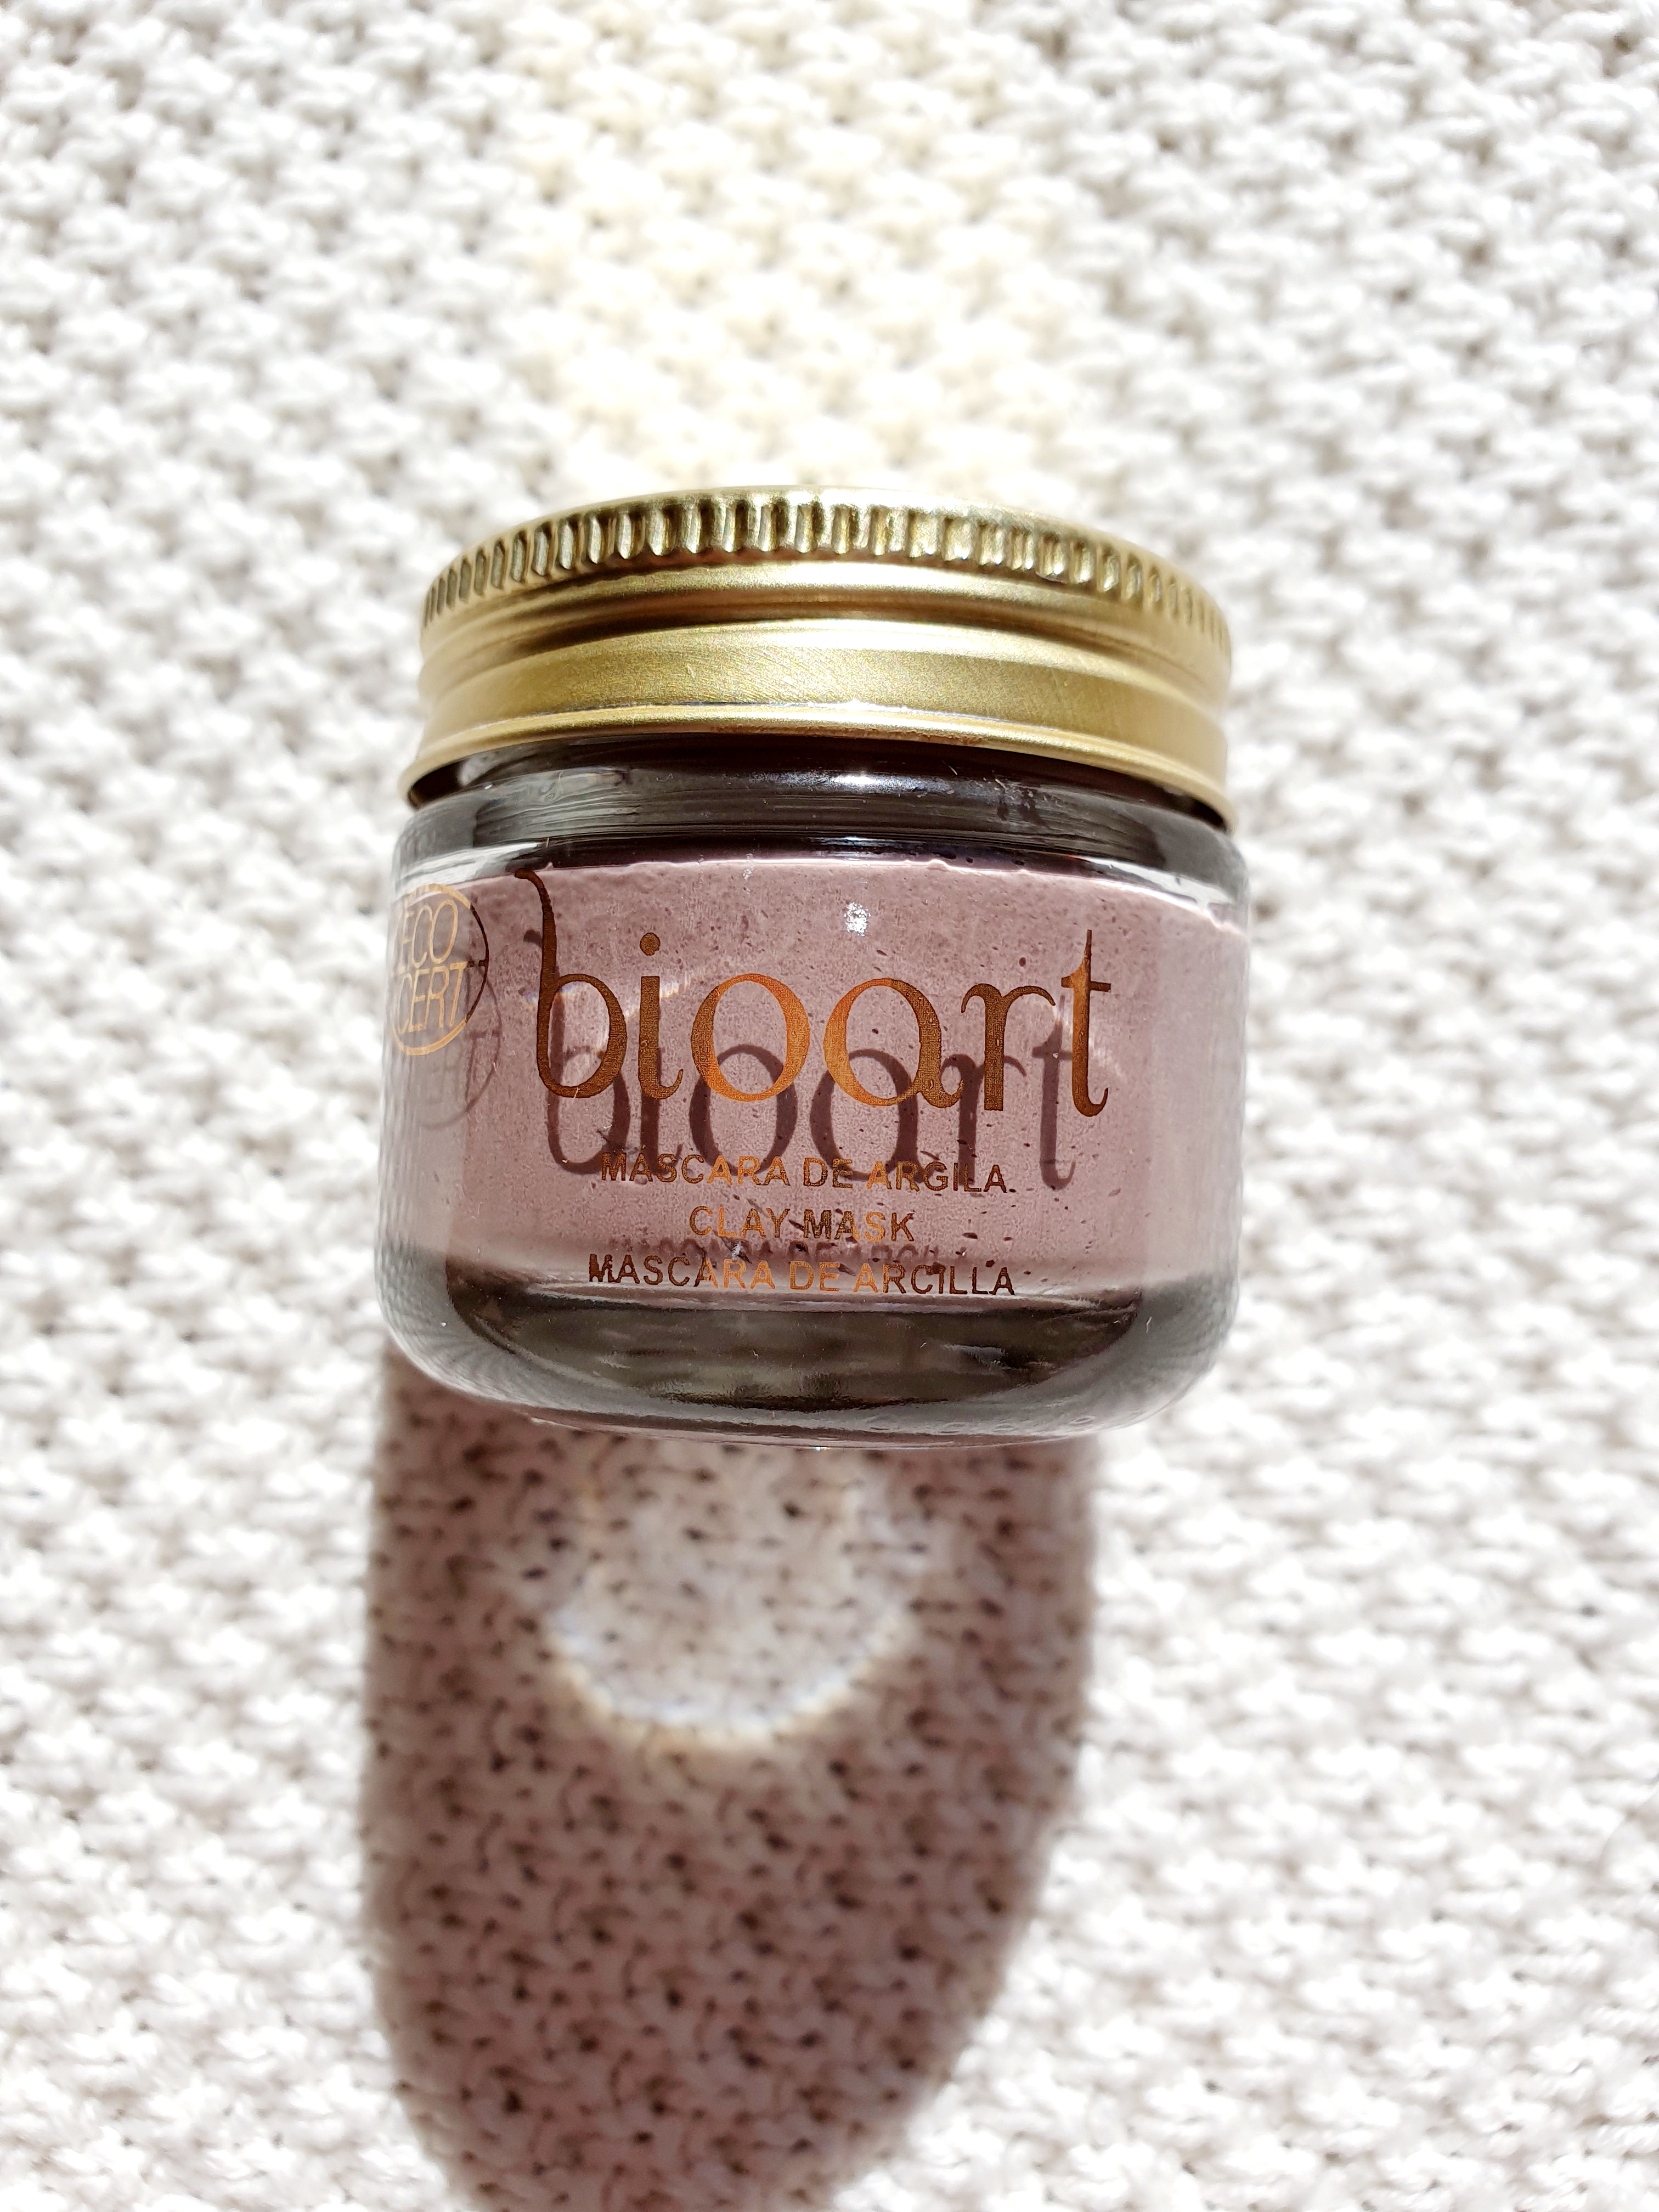 Bioart beauty products